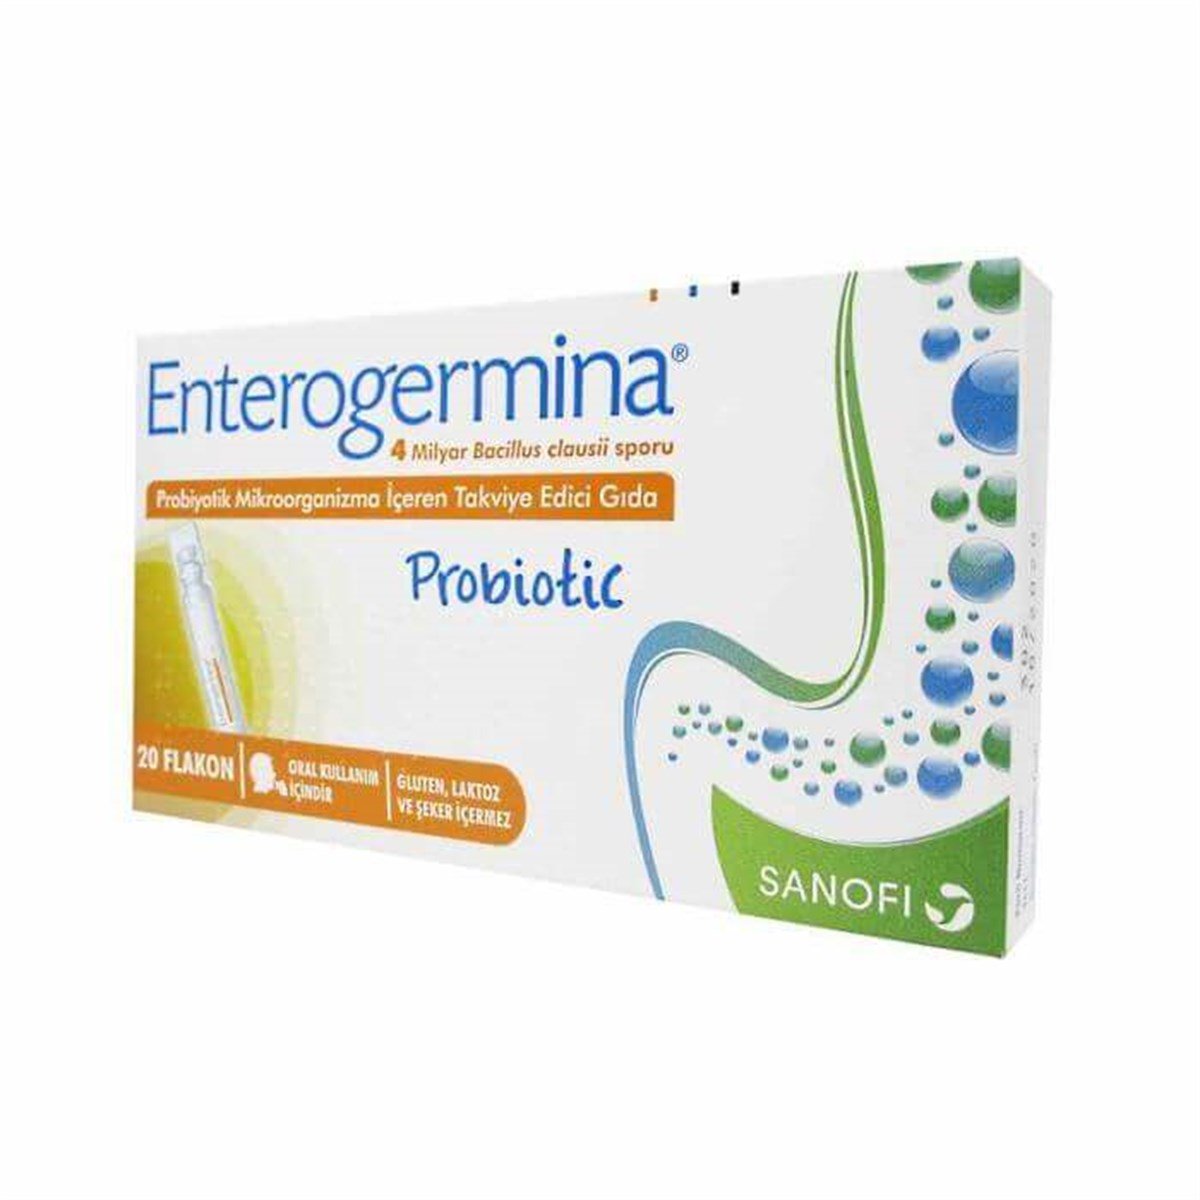 Enterogermina Yetişkin 5 ml x 20 Flakon Fiyatları | Dermosiparis.com